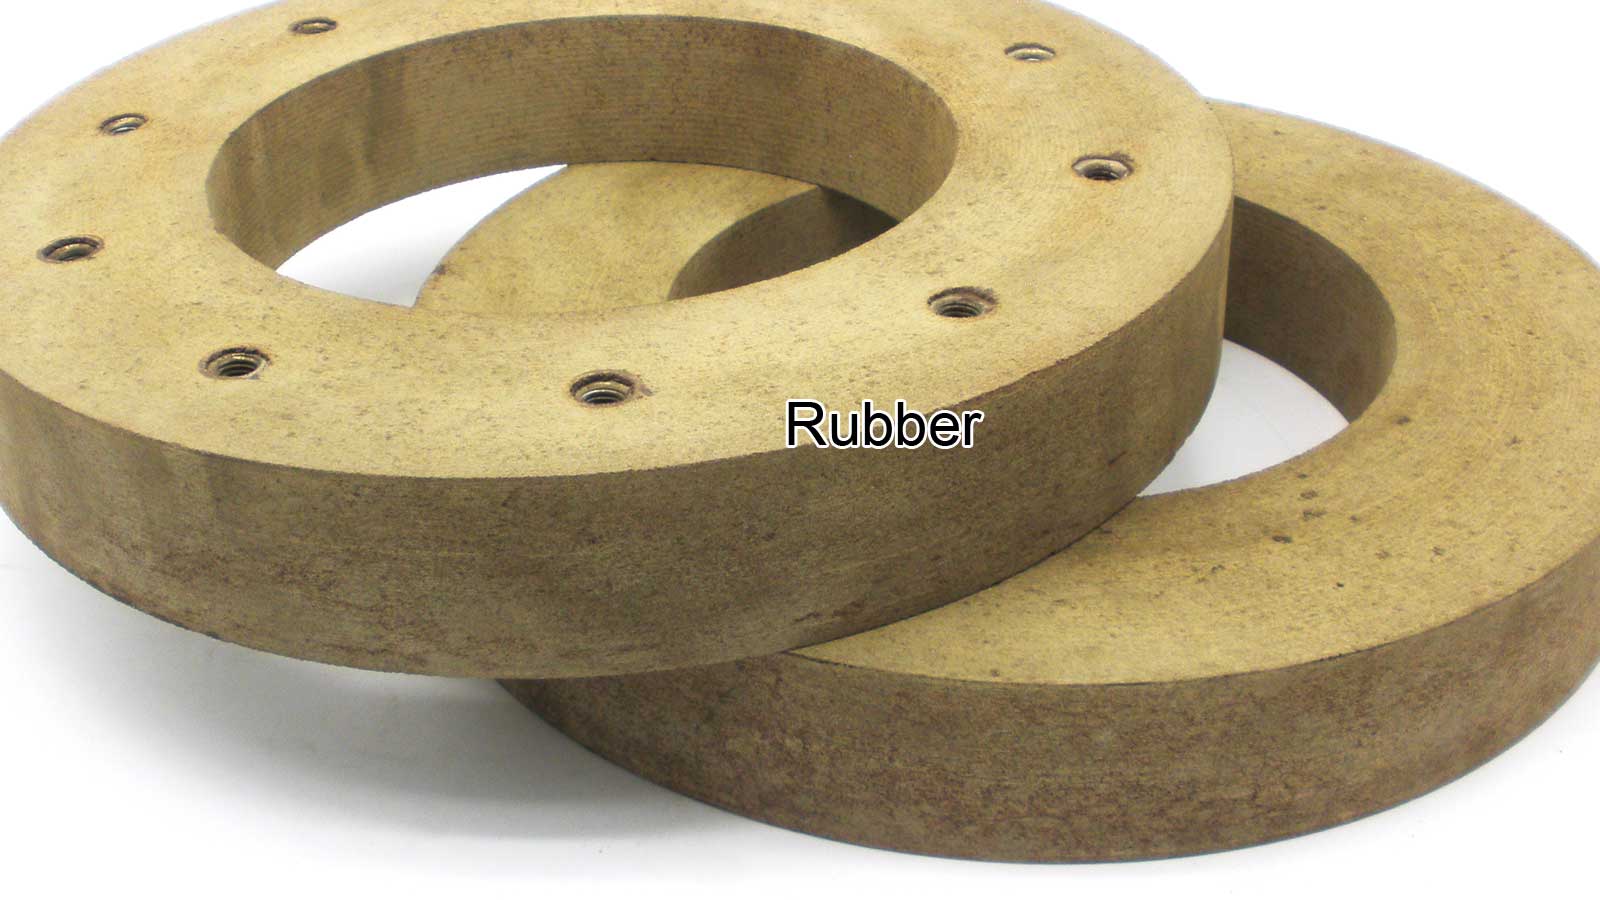 Rubber bond grinding wheels